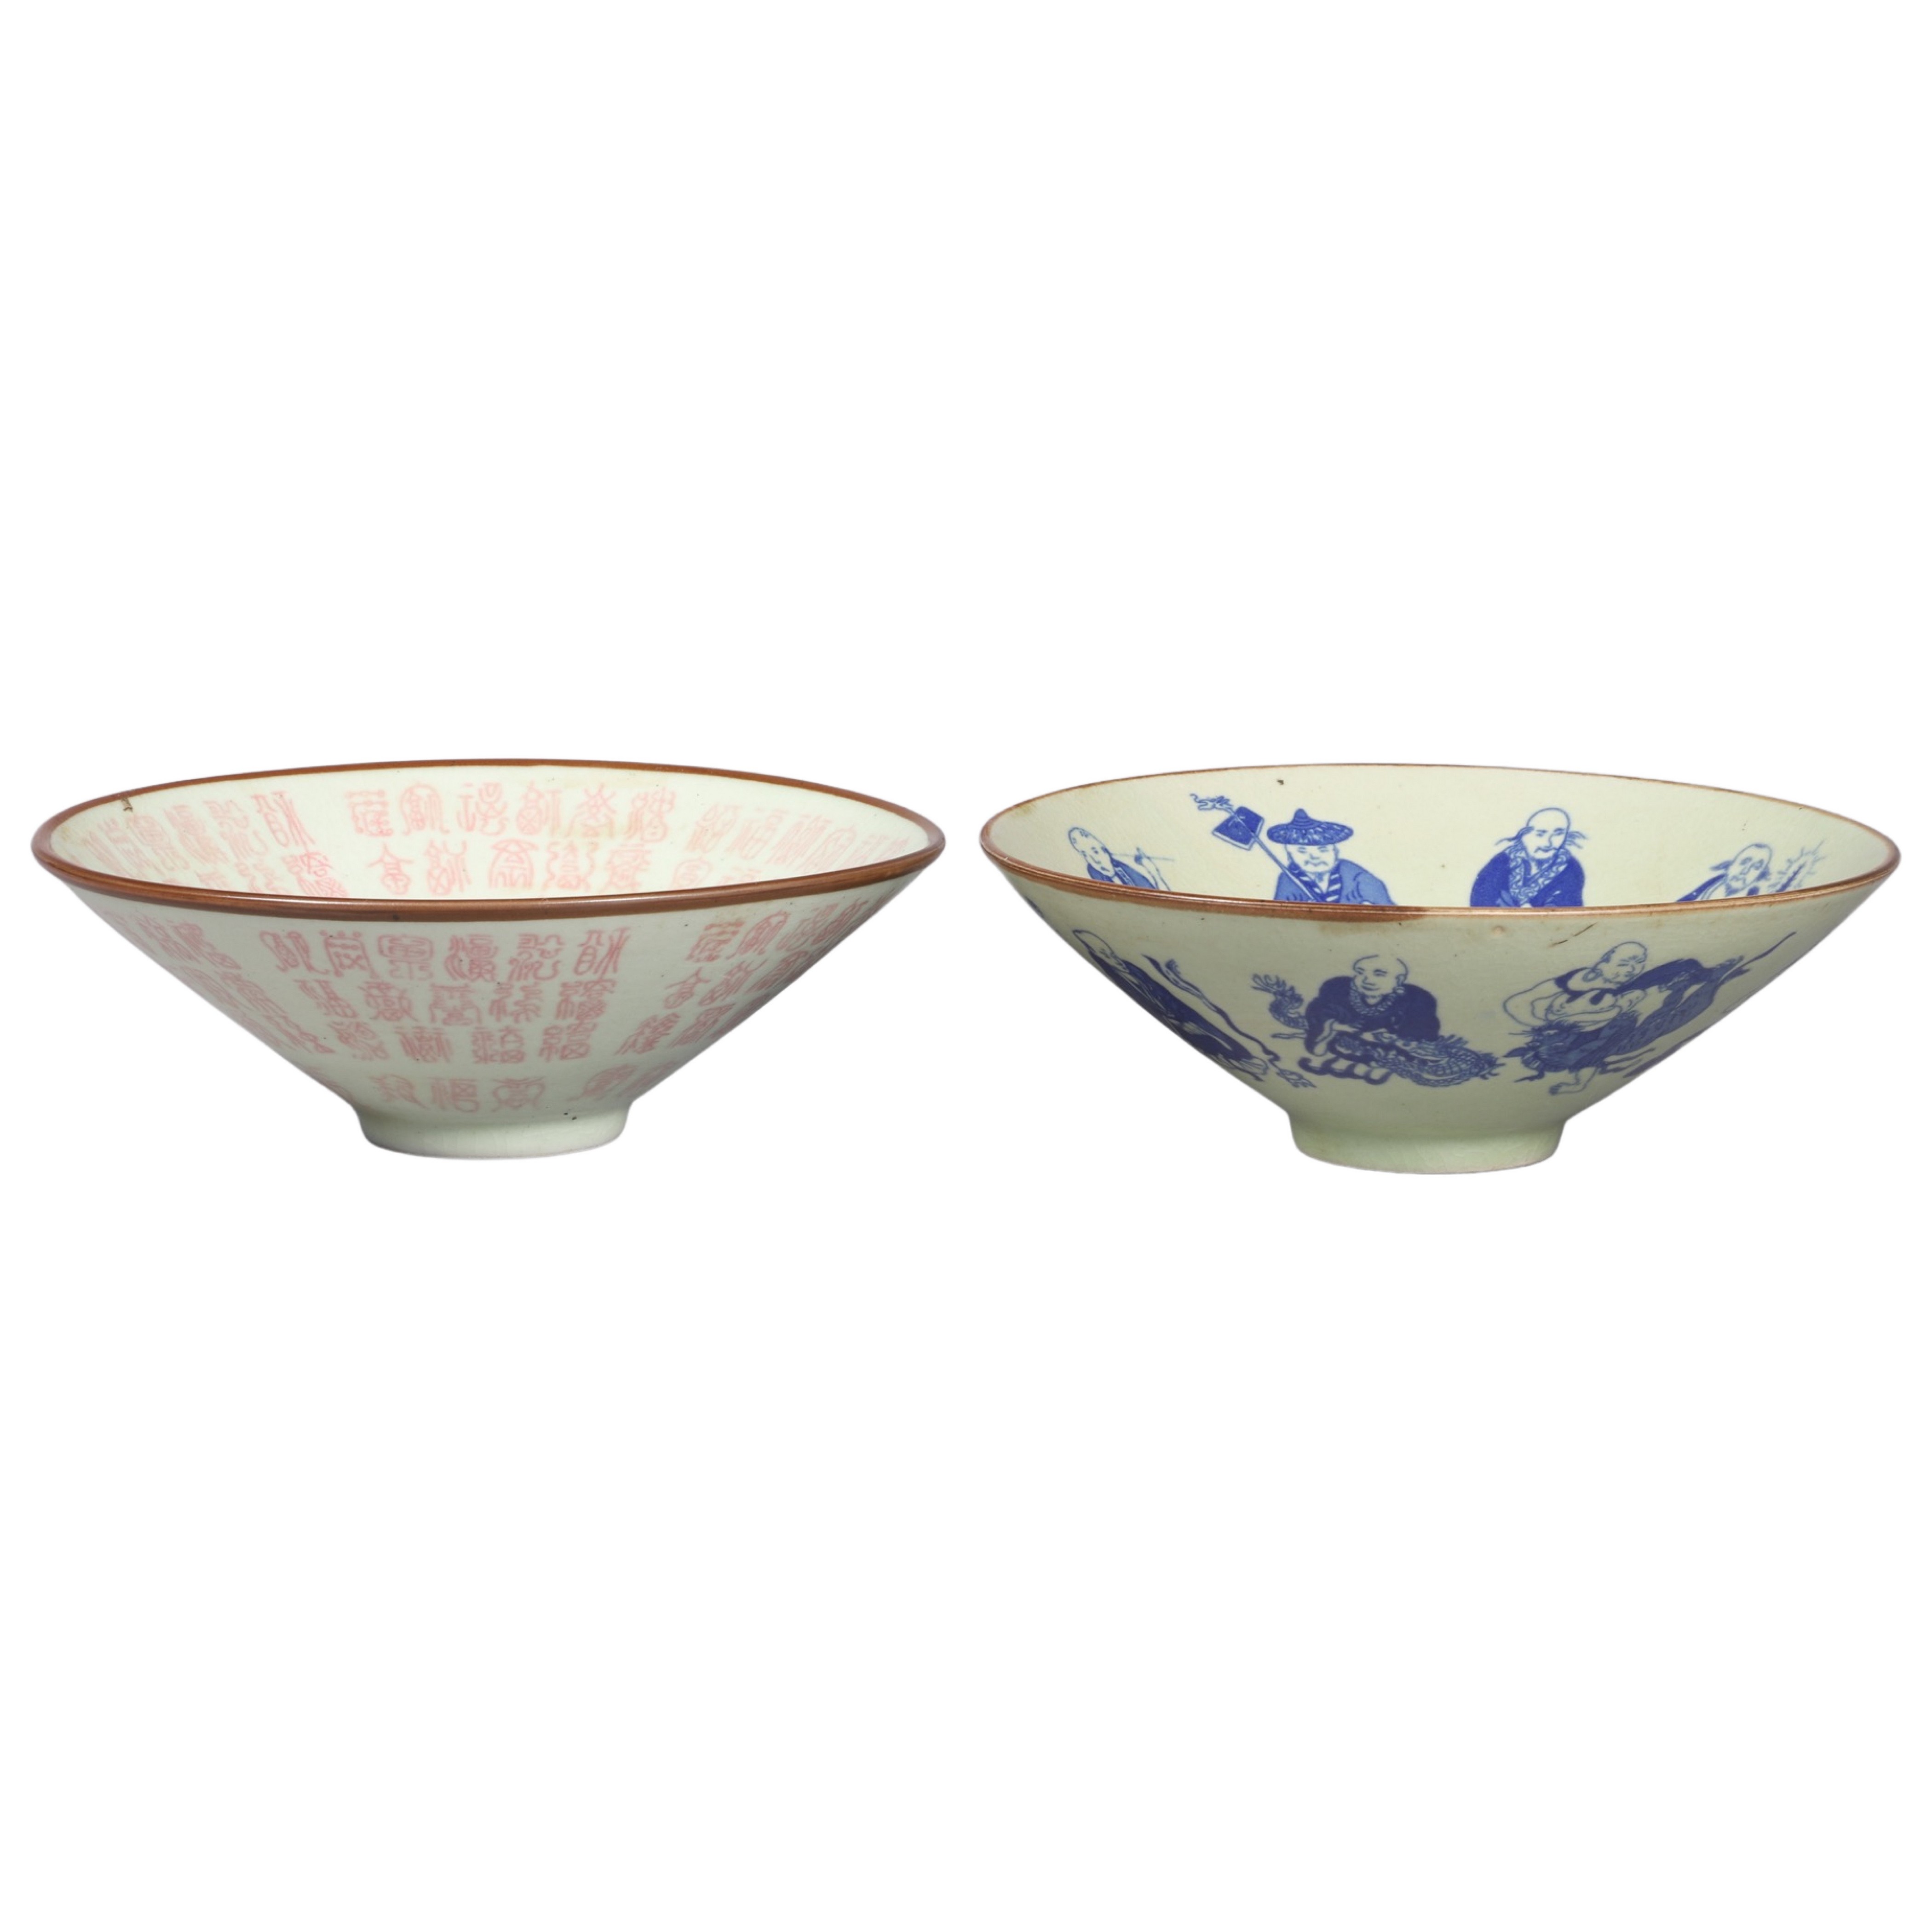  2 Chinese celadon porcelain bowls  3b4fe5